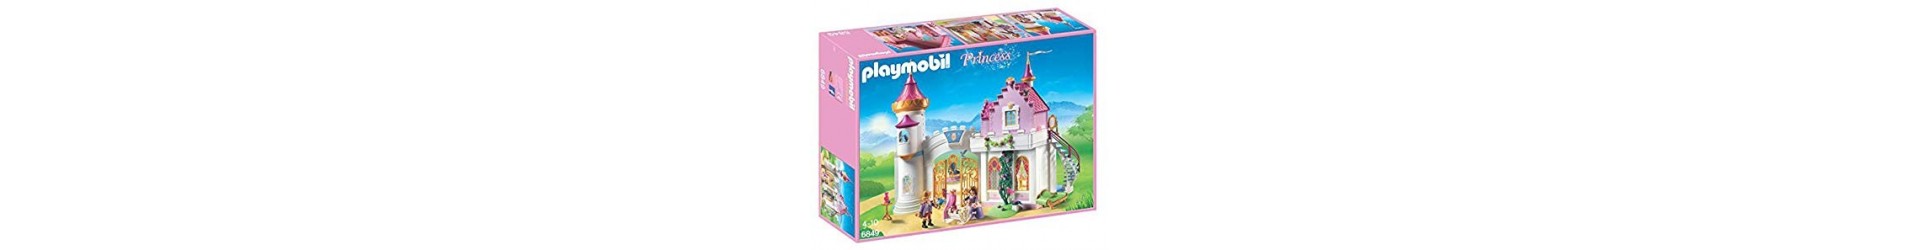 PLAYMOBIL PRINCESS giocattoli castelli cavalli carrozze principesse